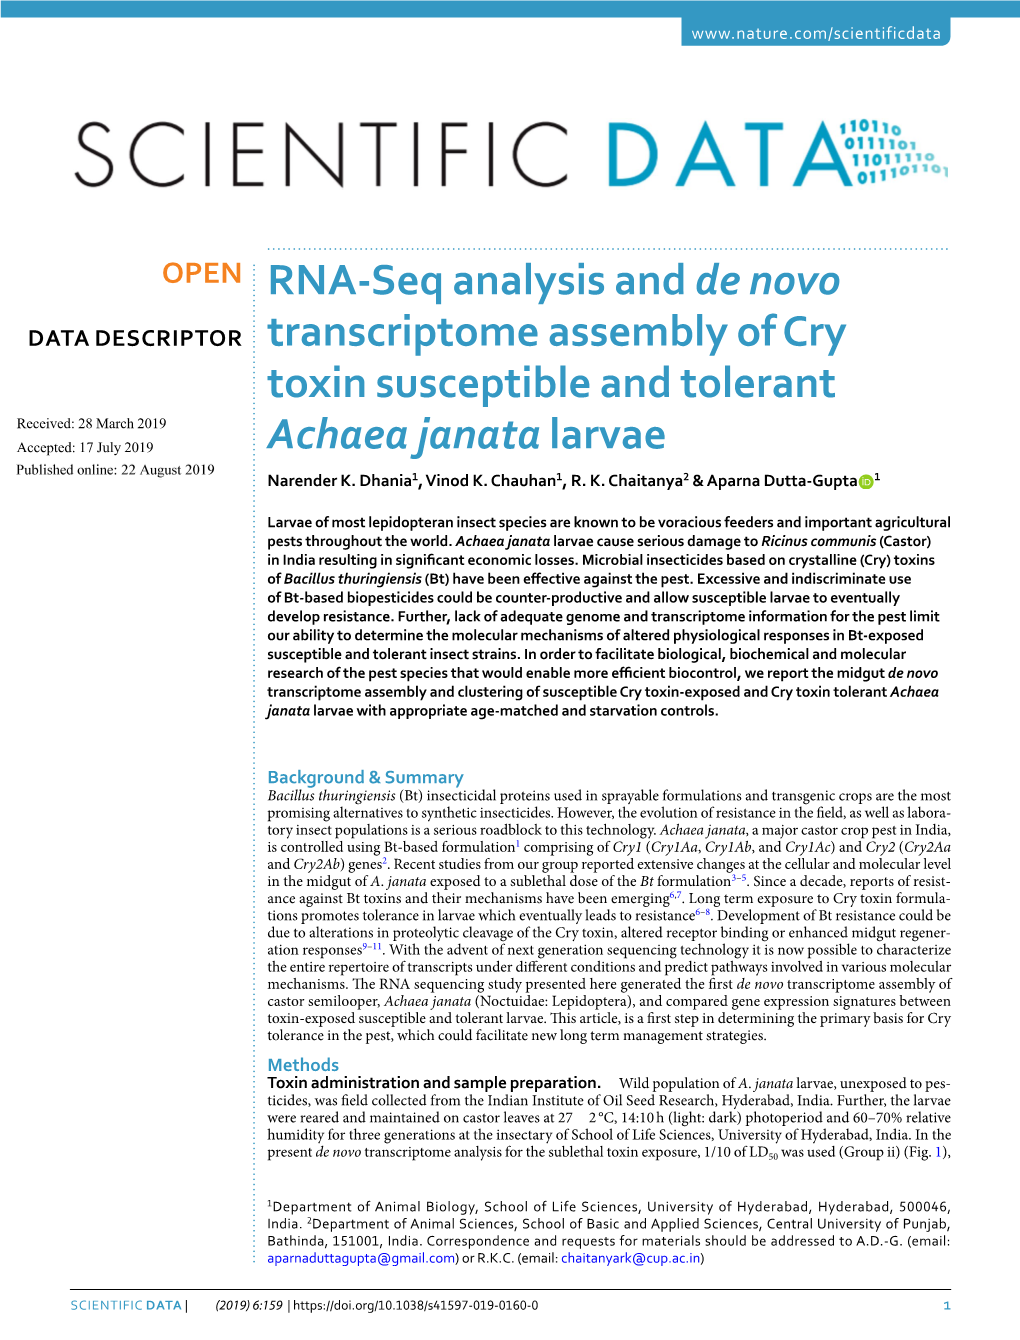 RNA-Seq Analysis and De Novo Transcriptome Assembly of Cry Toxin Susceptible and Tolerant Achaea Janata Larvae